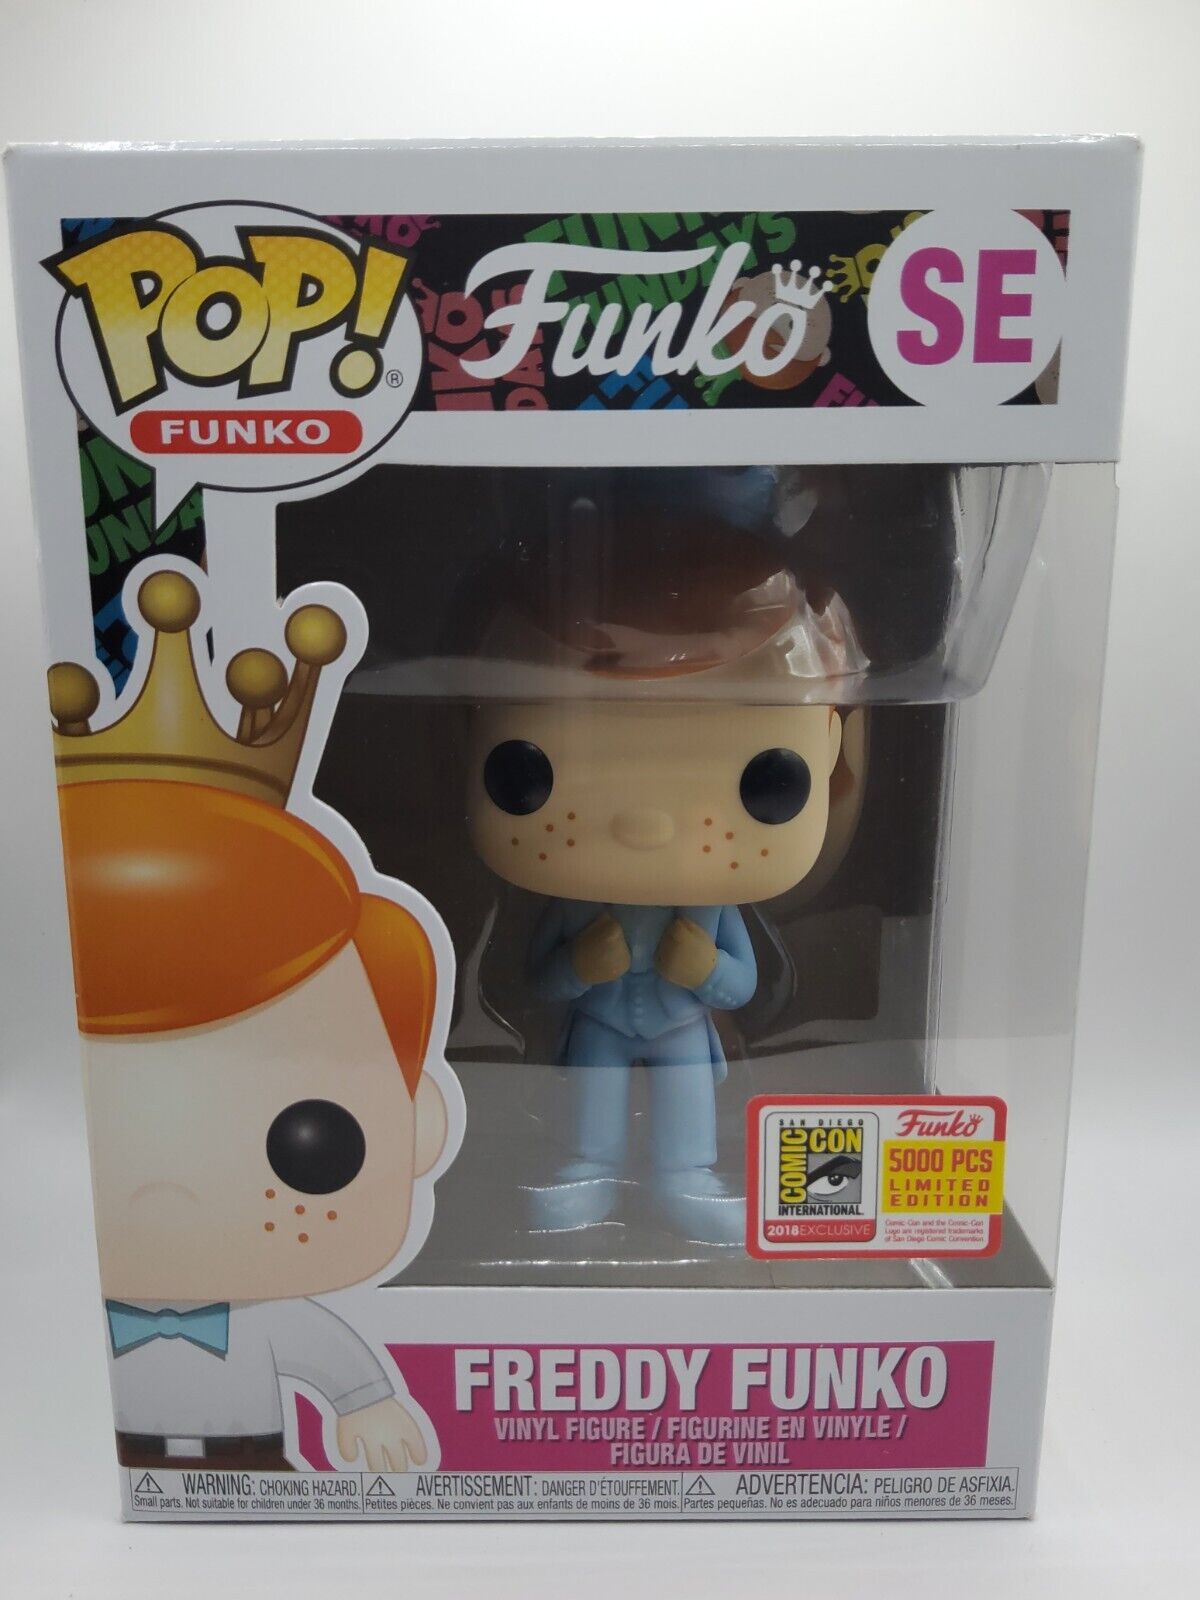 Funko Pop SE FREDDY FUNKO Blue Tuxedo (Dumb and Dumber) Vinyl Figure SDCC Excl